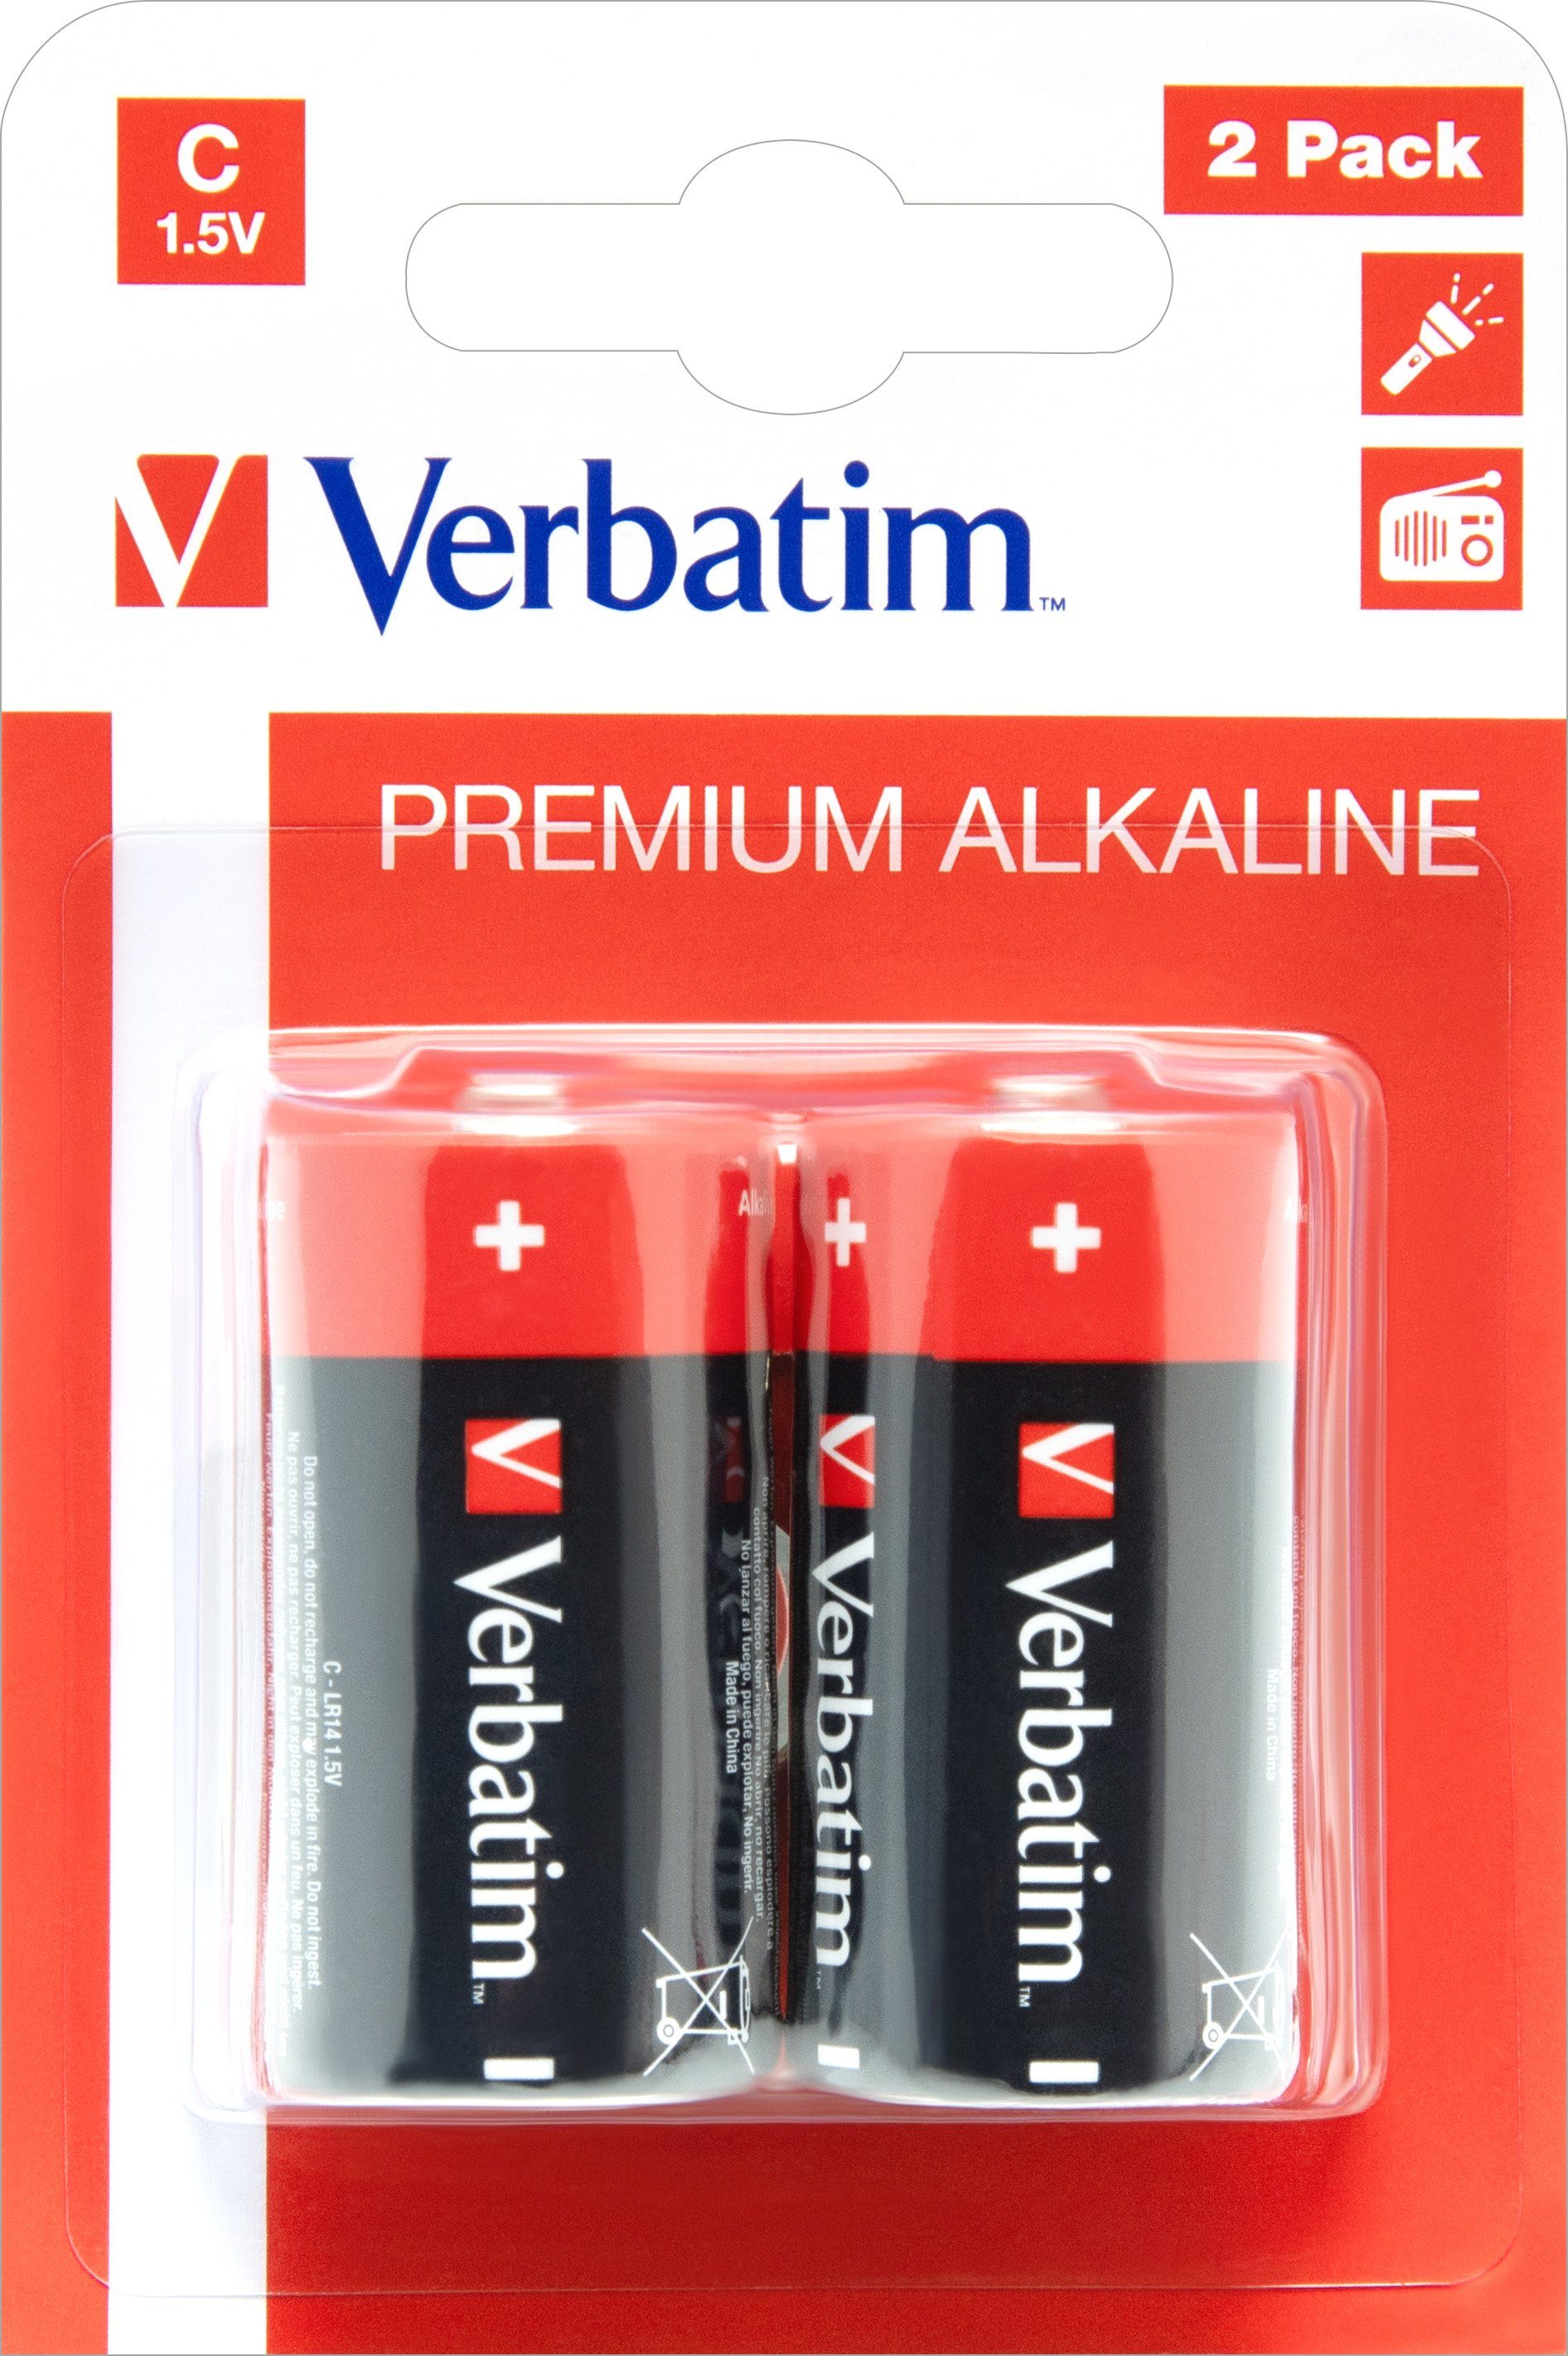 Verbatim Verbatim Batterie Alkaline, Blist C, 1.5V Premium, Batterie Retail LR14, Baby